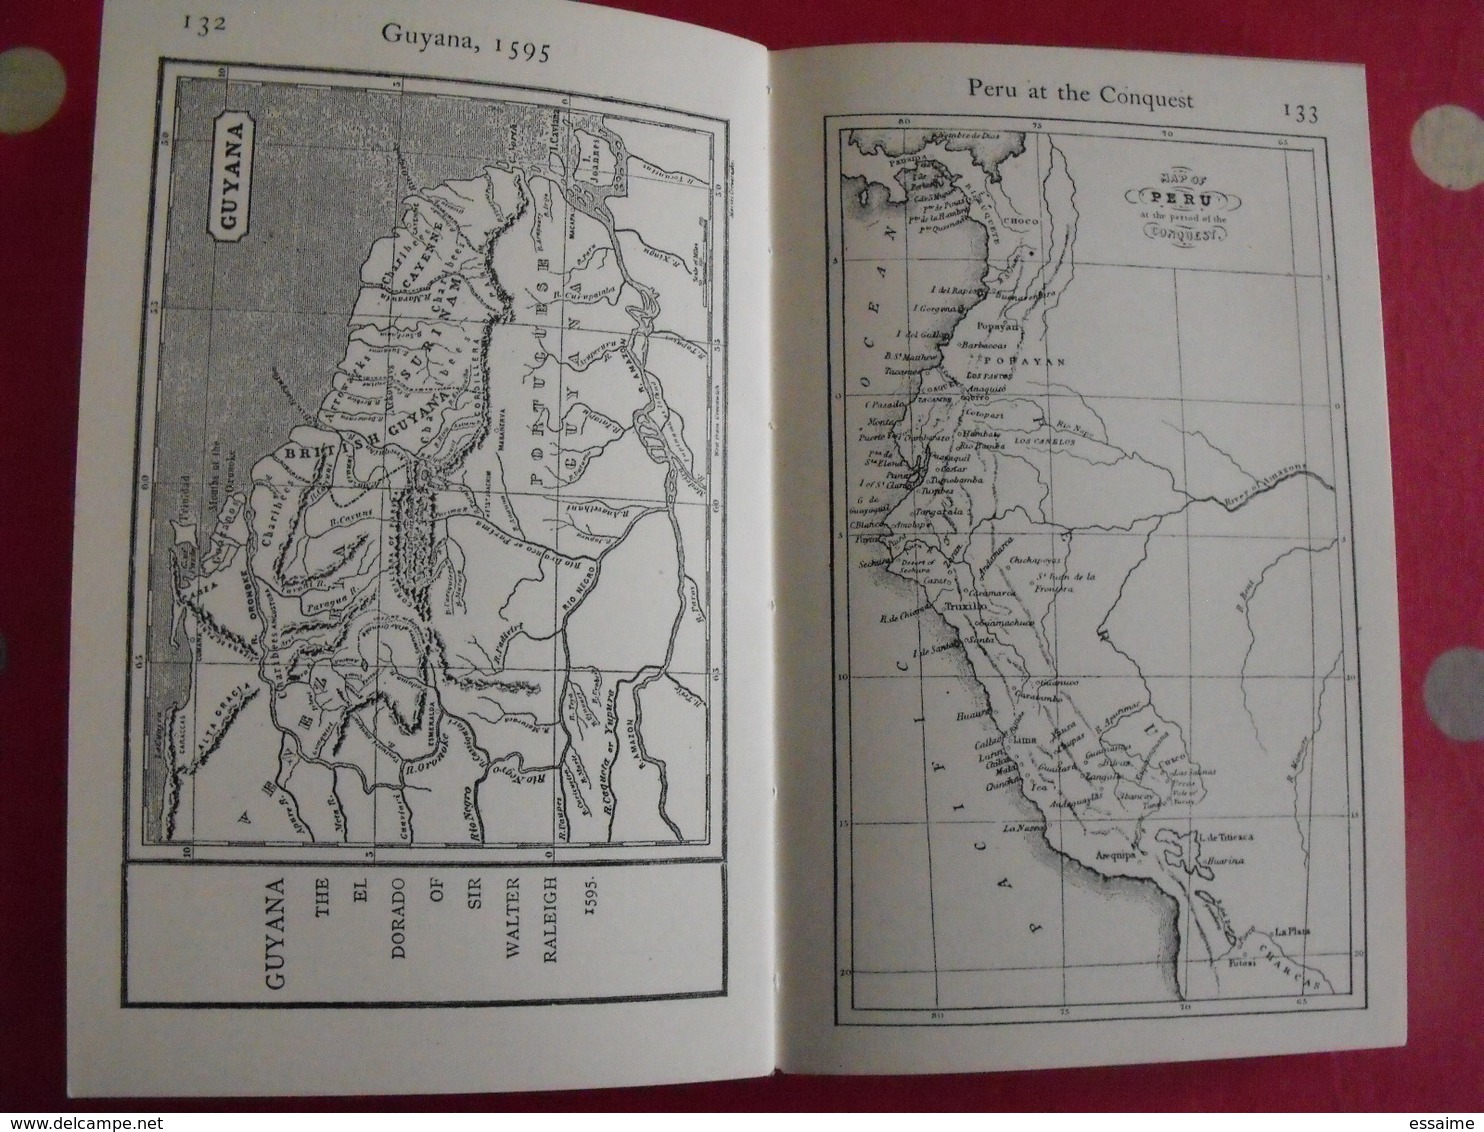 a literary & historical atlas of America. Bartholomew. Dent, London, 1912